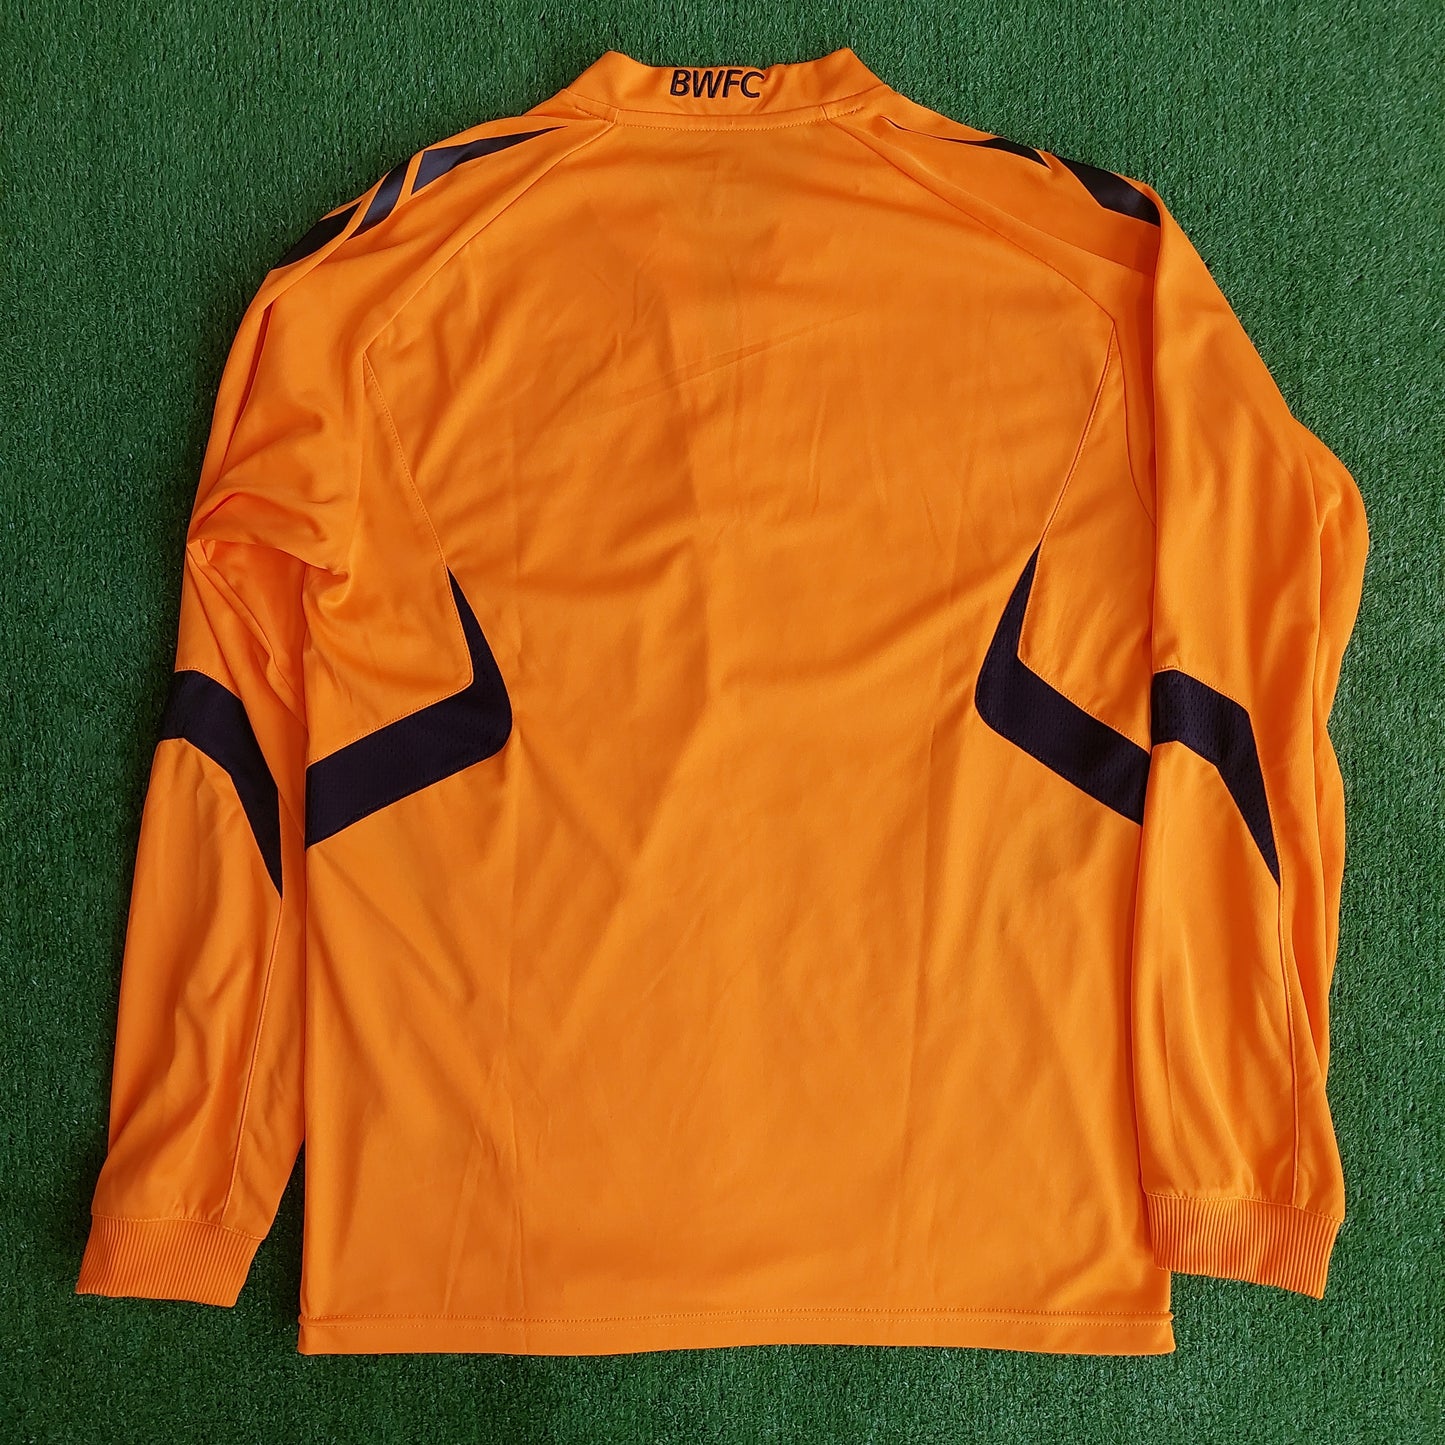 Bolton Wanderers 2010/11 Goalkeeper Shirt (Very Good) - Size S